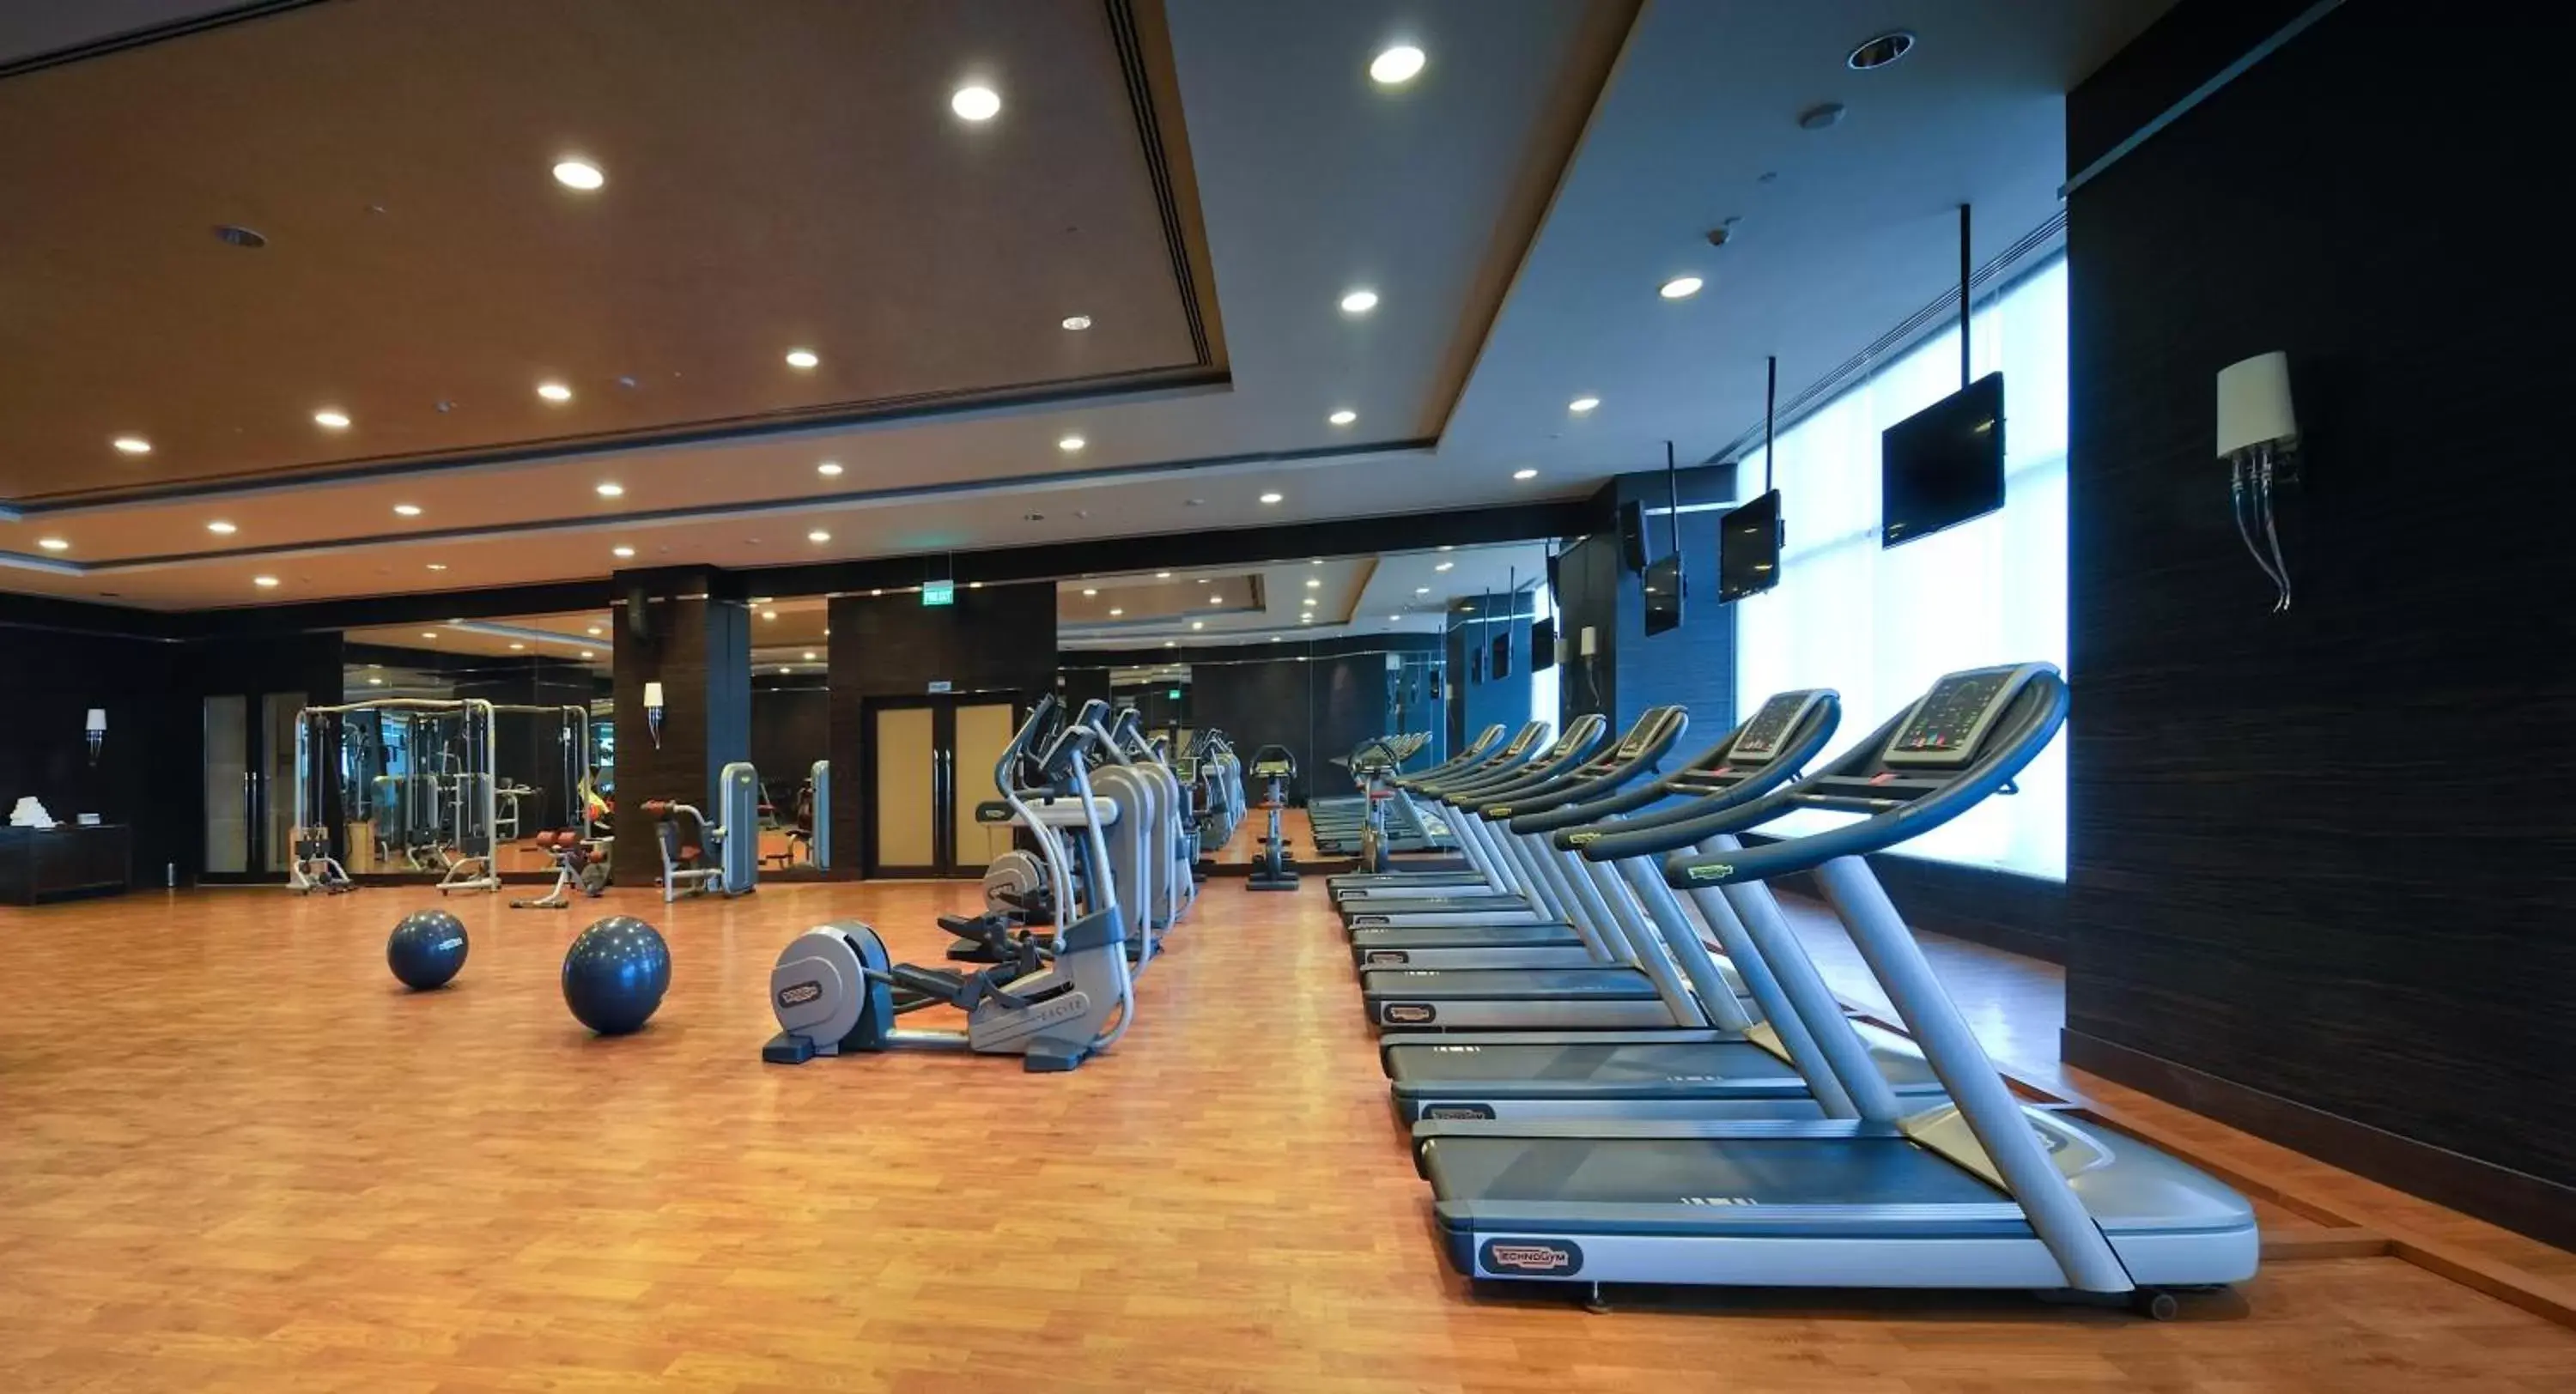 Fitness centre/facilities, Fitness Center/Facilities in Radisson Blu Hotel New Delhi Paschim Vihar